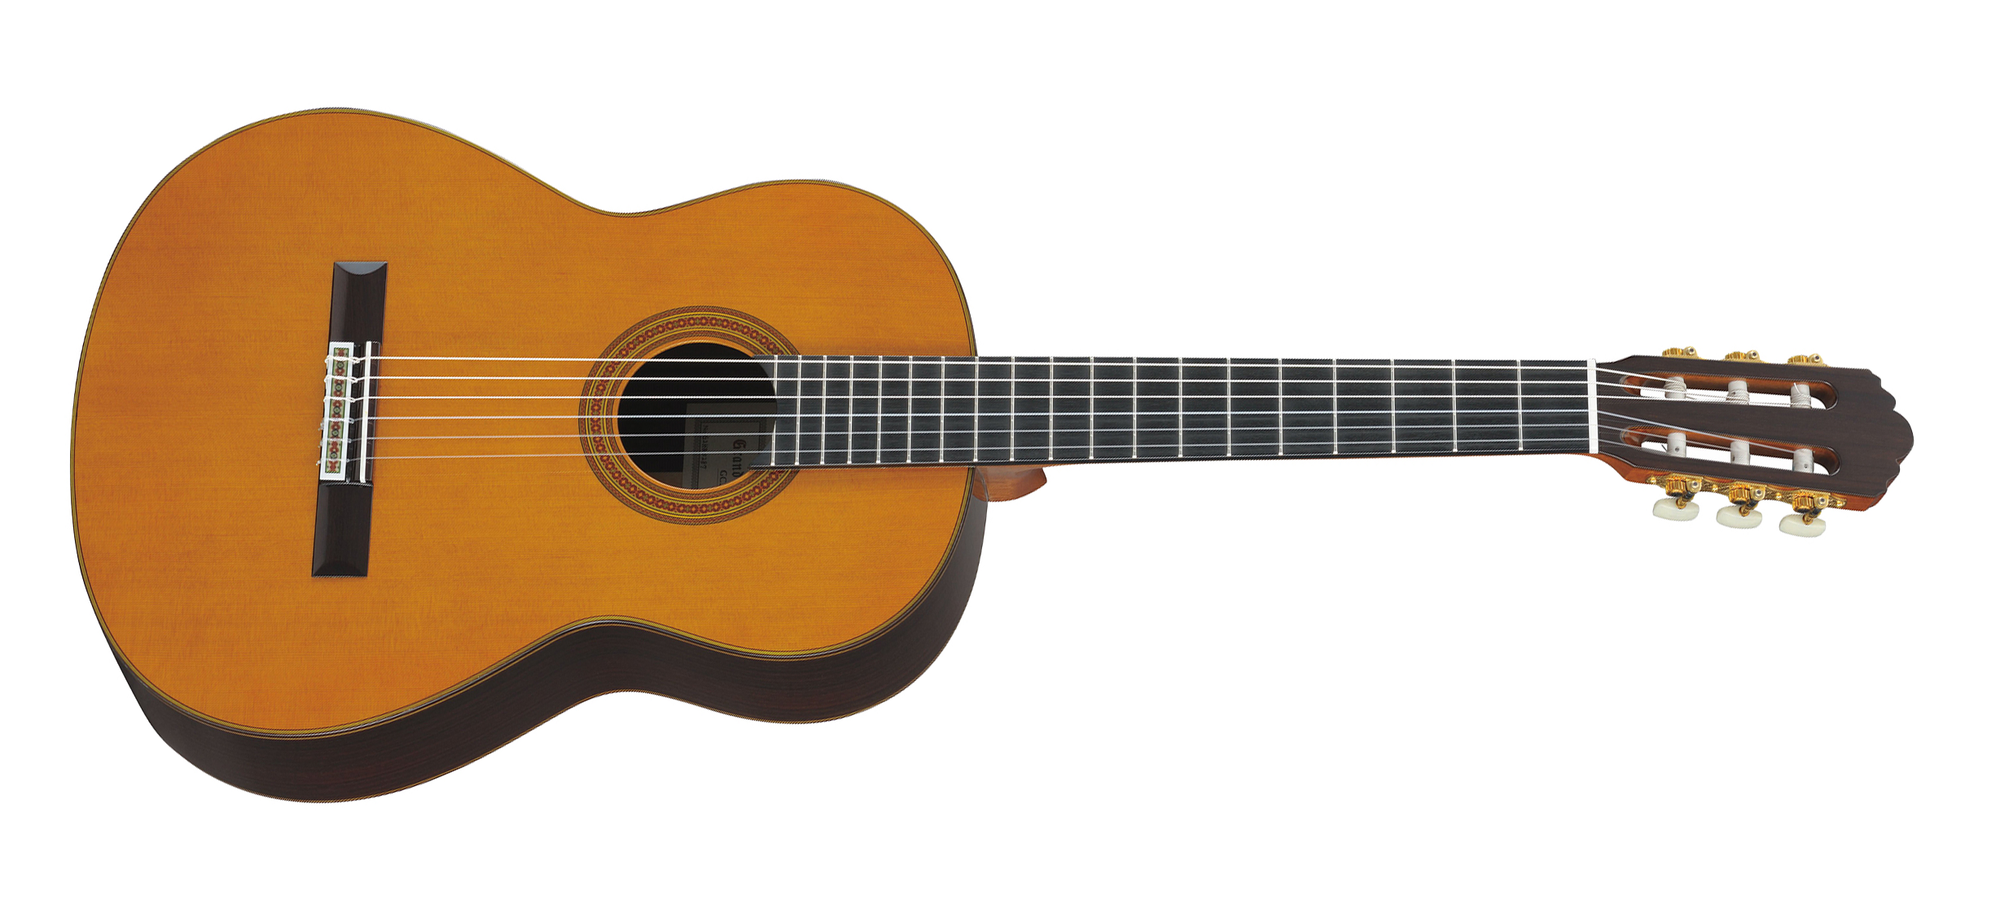 Yamaha GC32C 6-String RH GC32 Classical Guitar - Cedar Top w/ Reinforced Carrying Bag